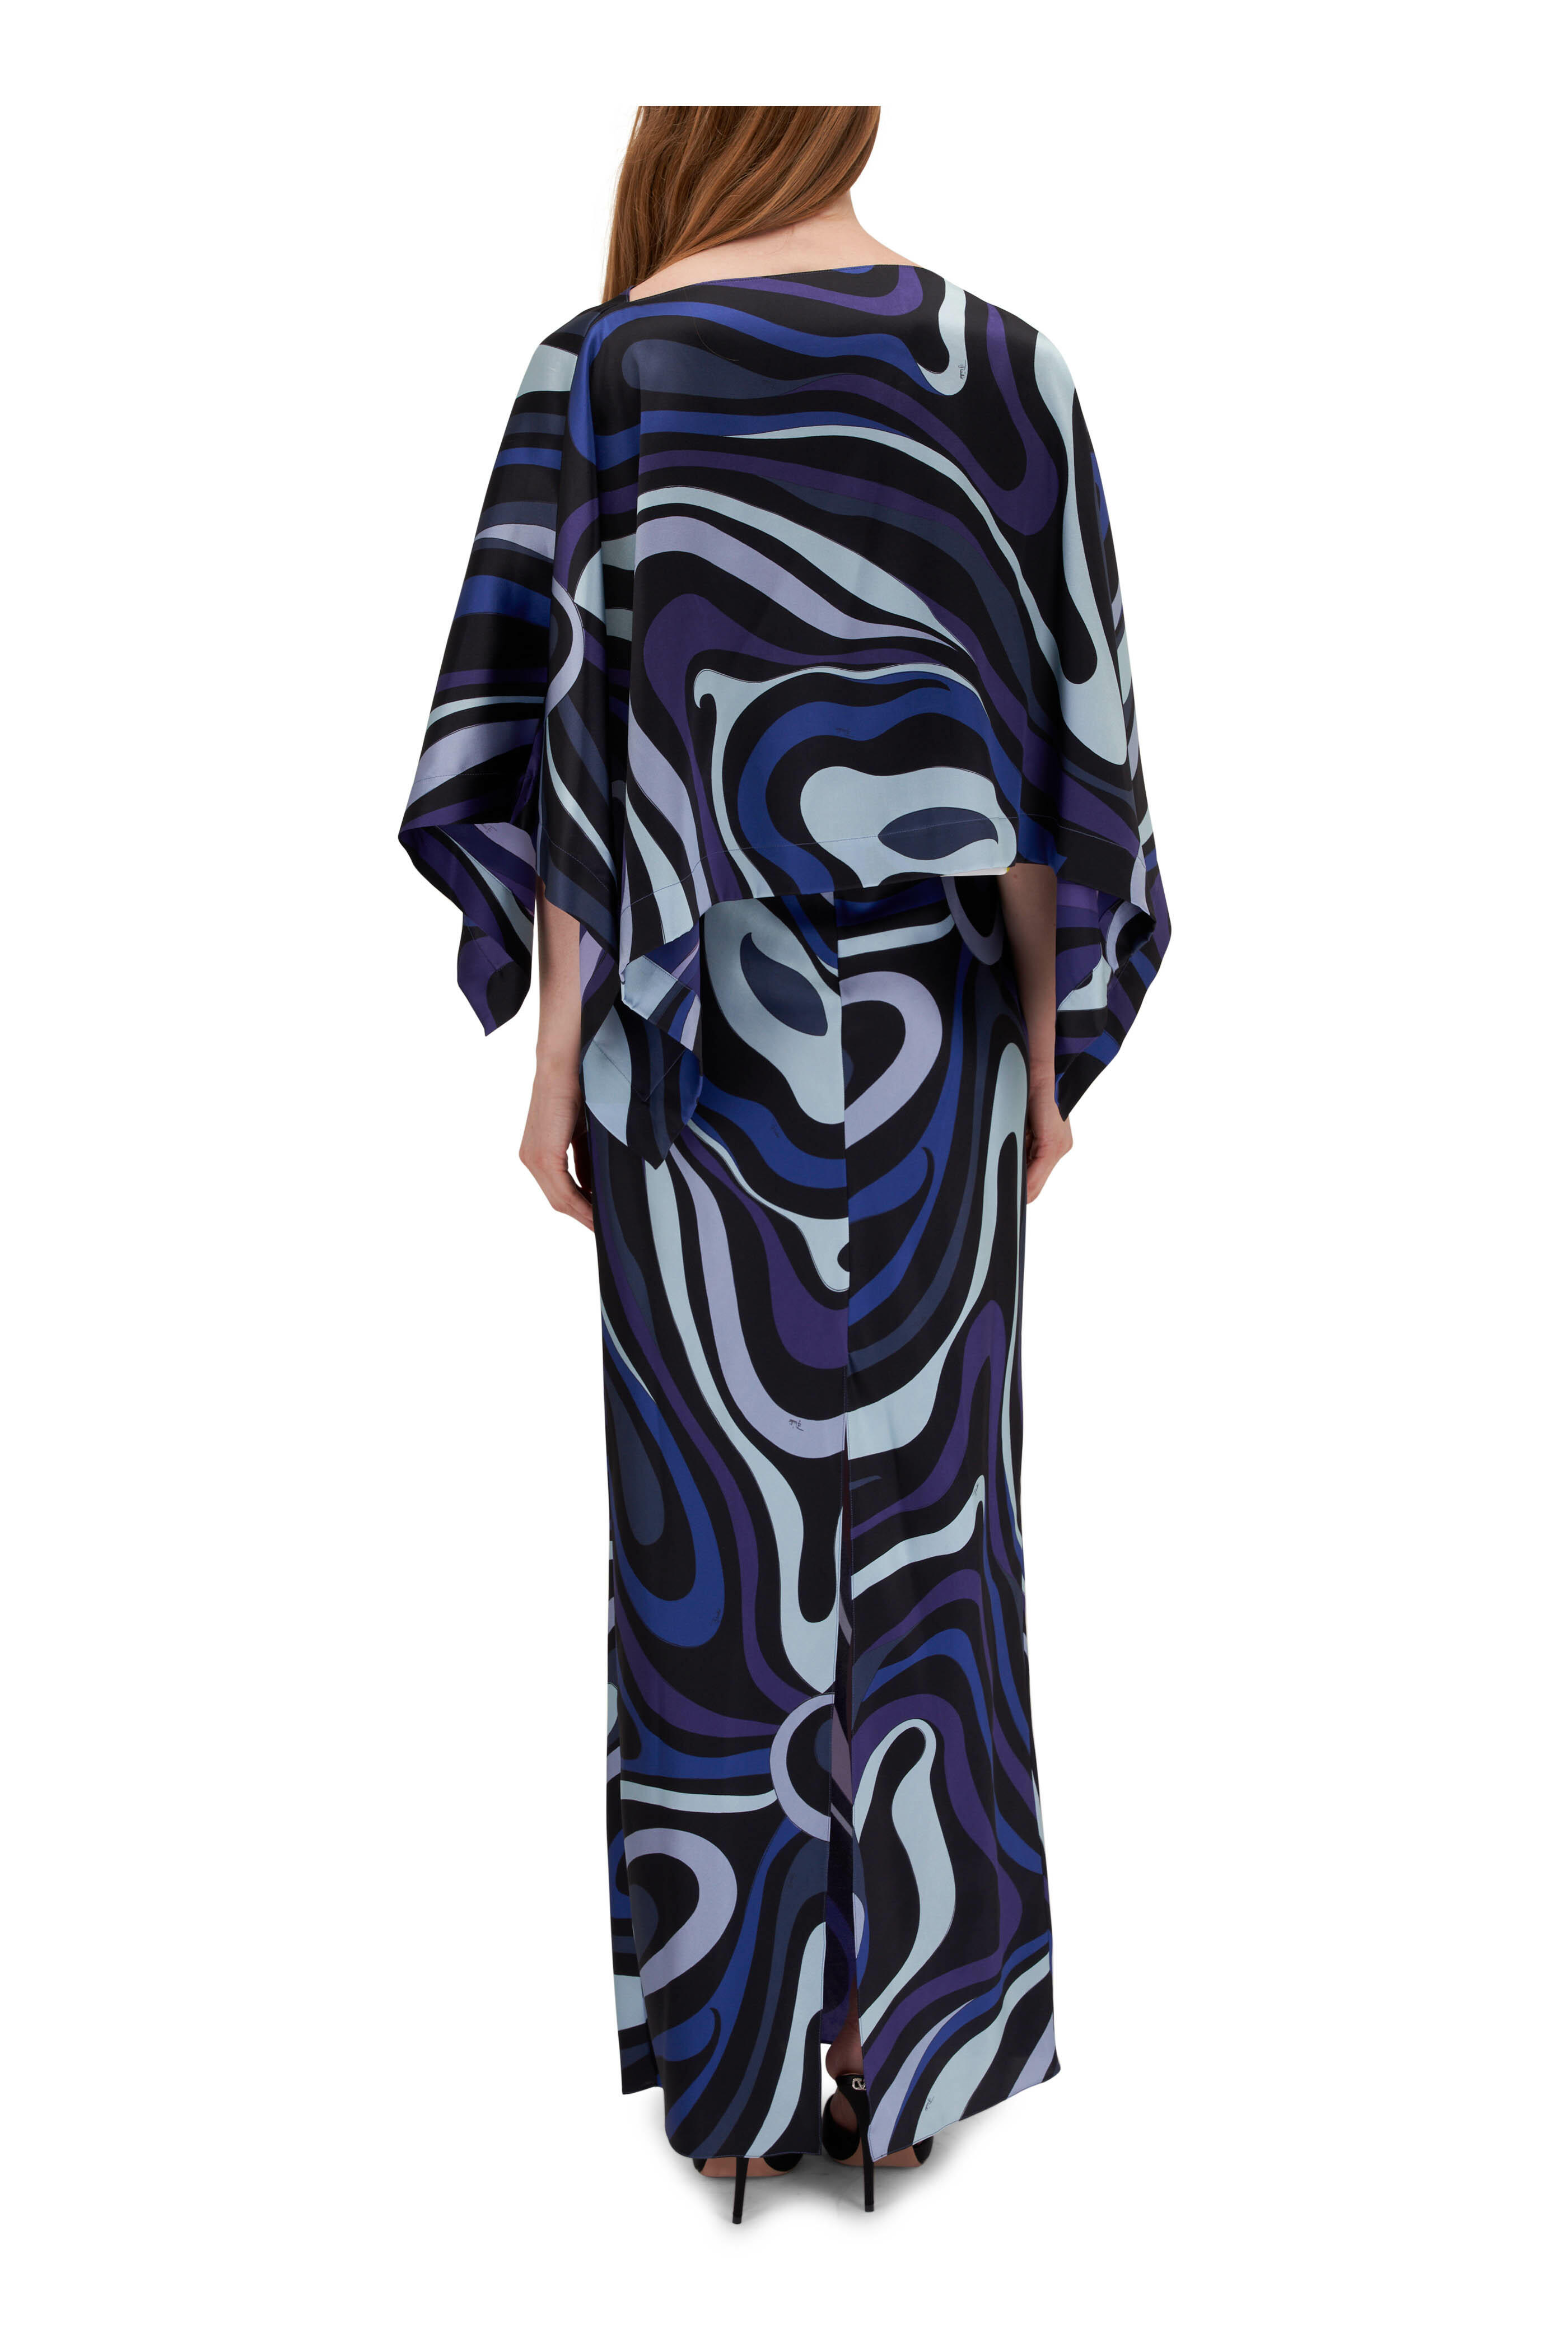 NY designer Pucci-esque print silk chiffon from